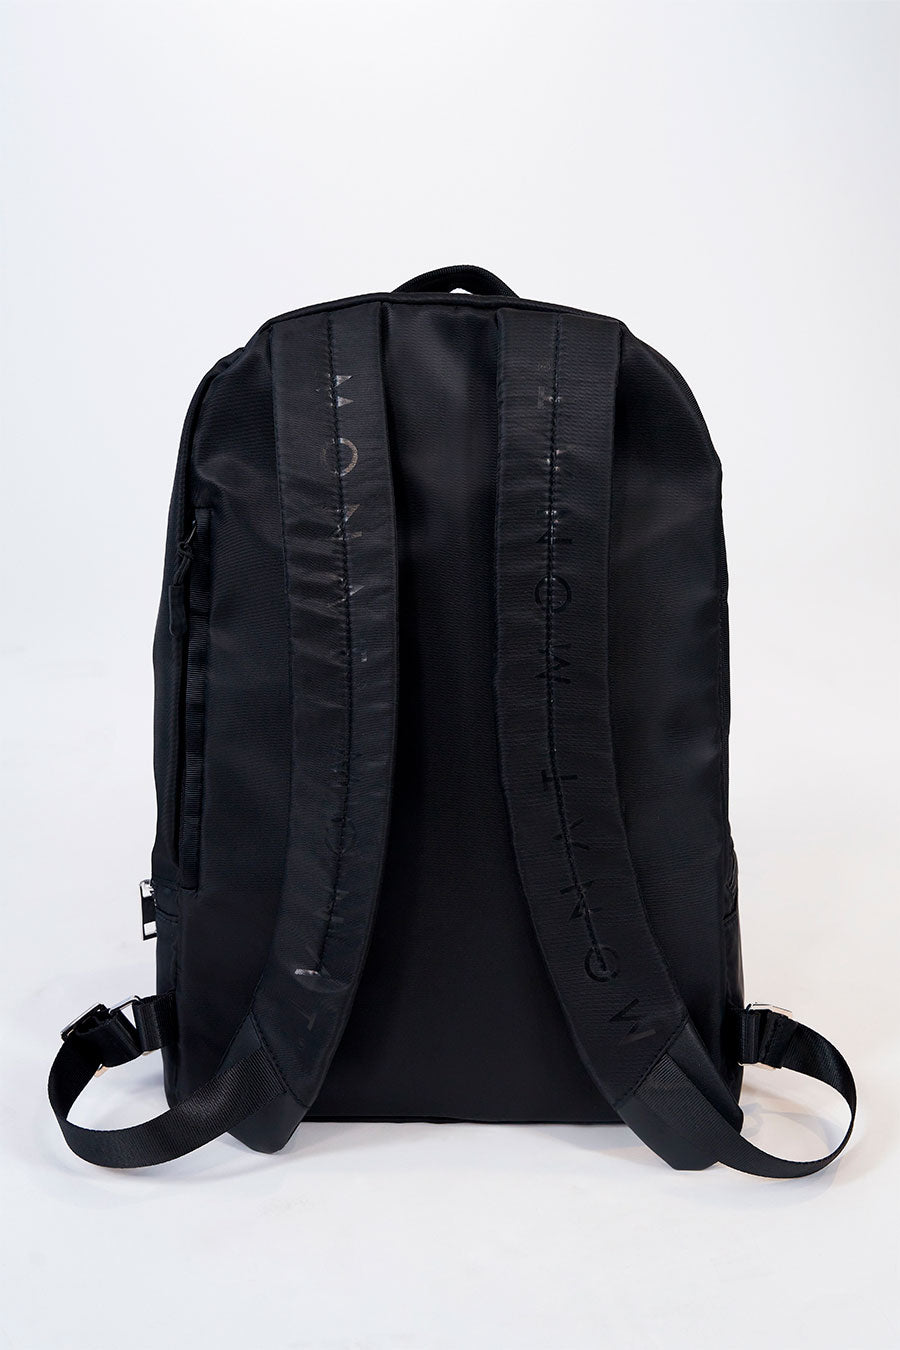 MONAT Backpack Black